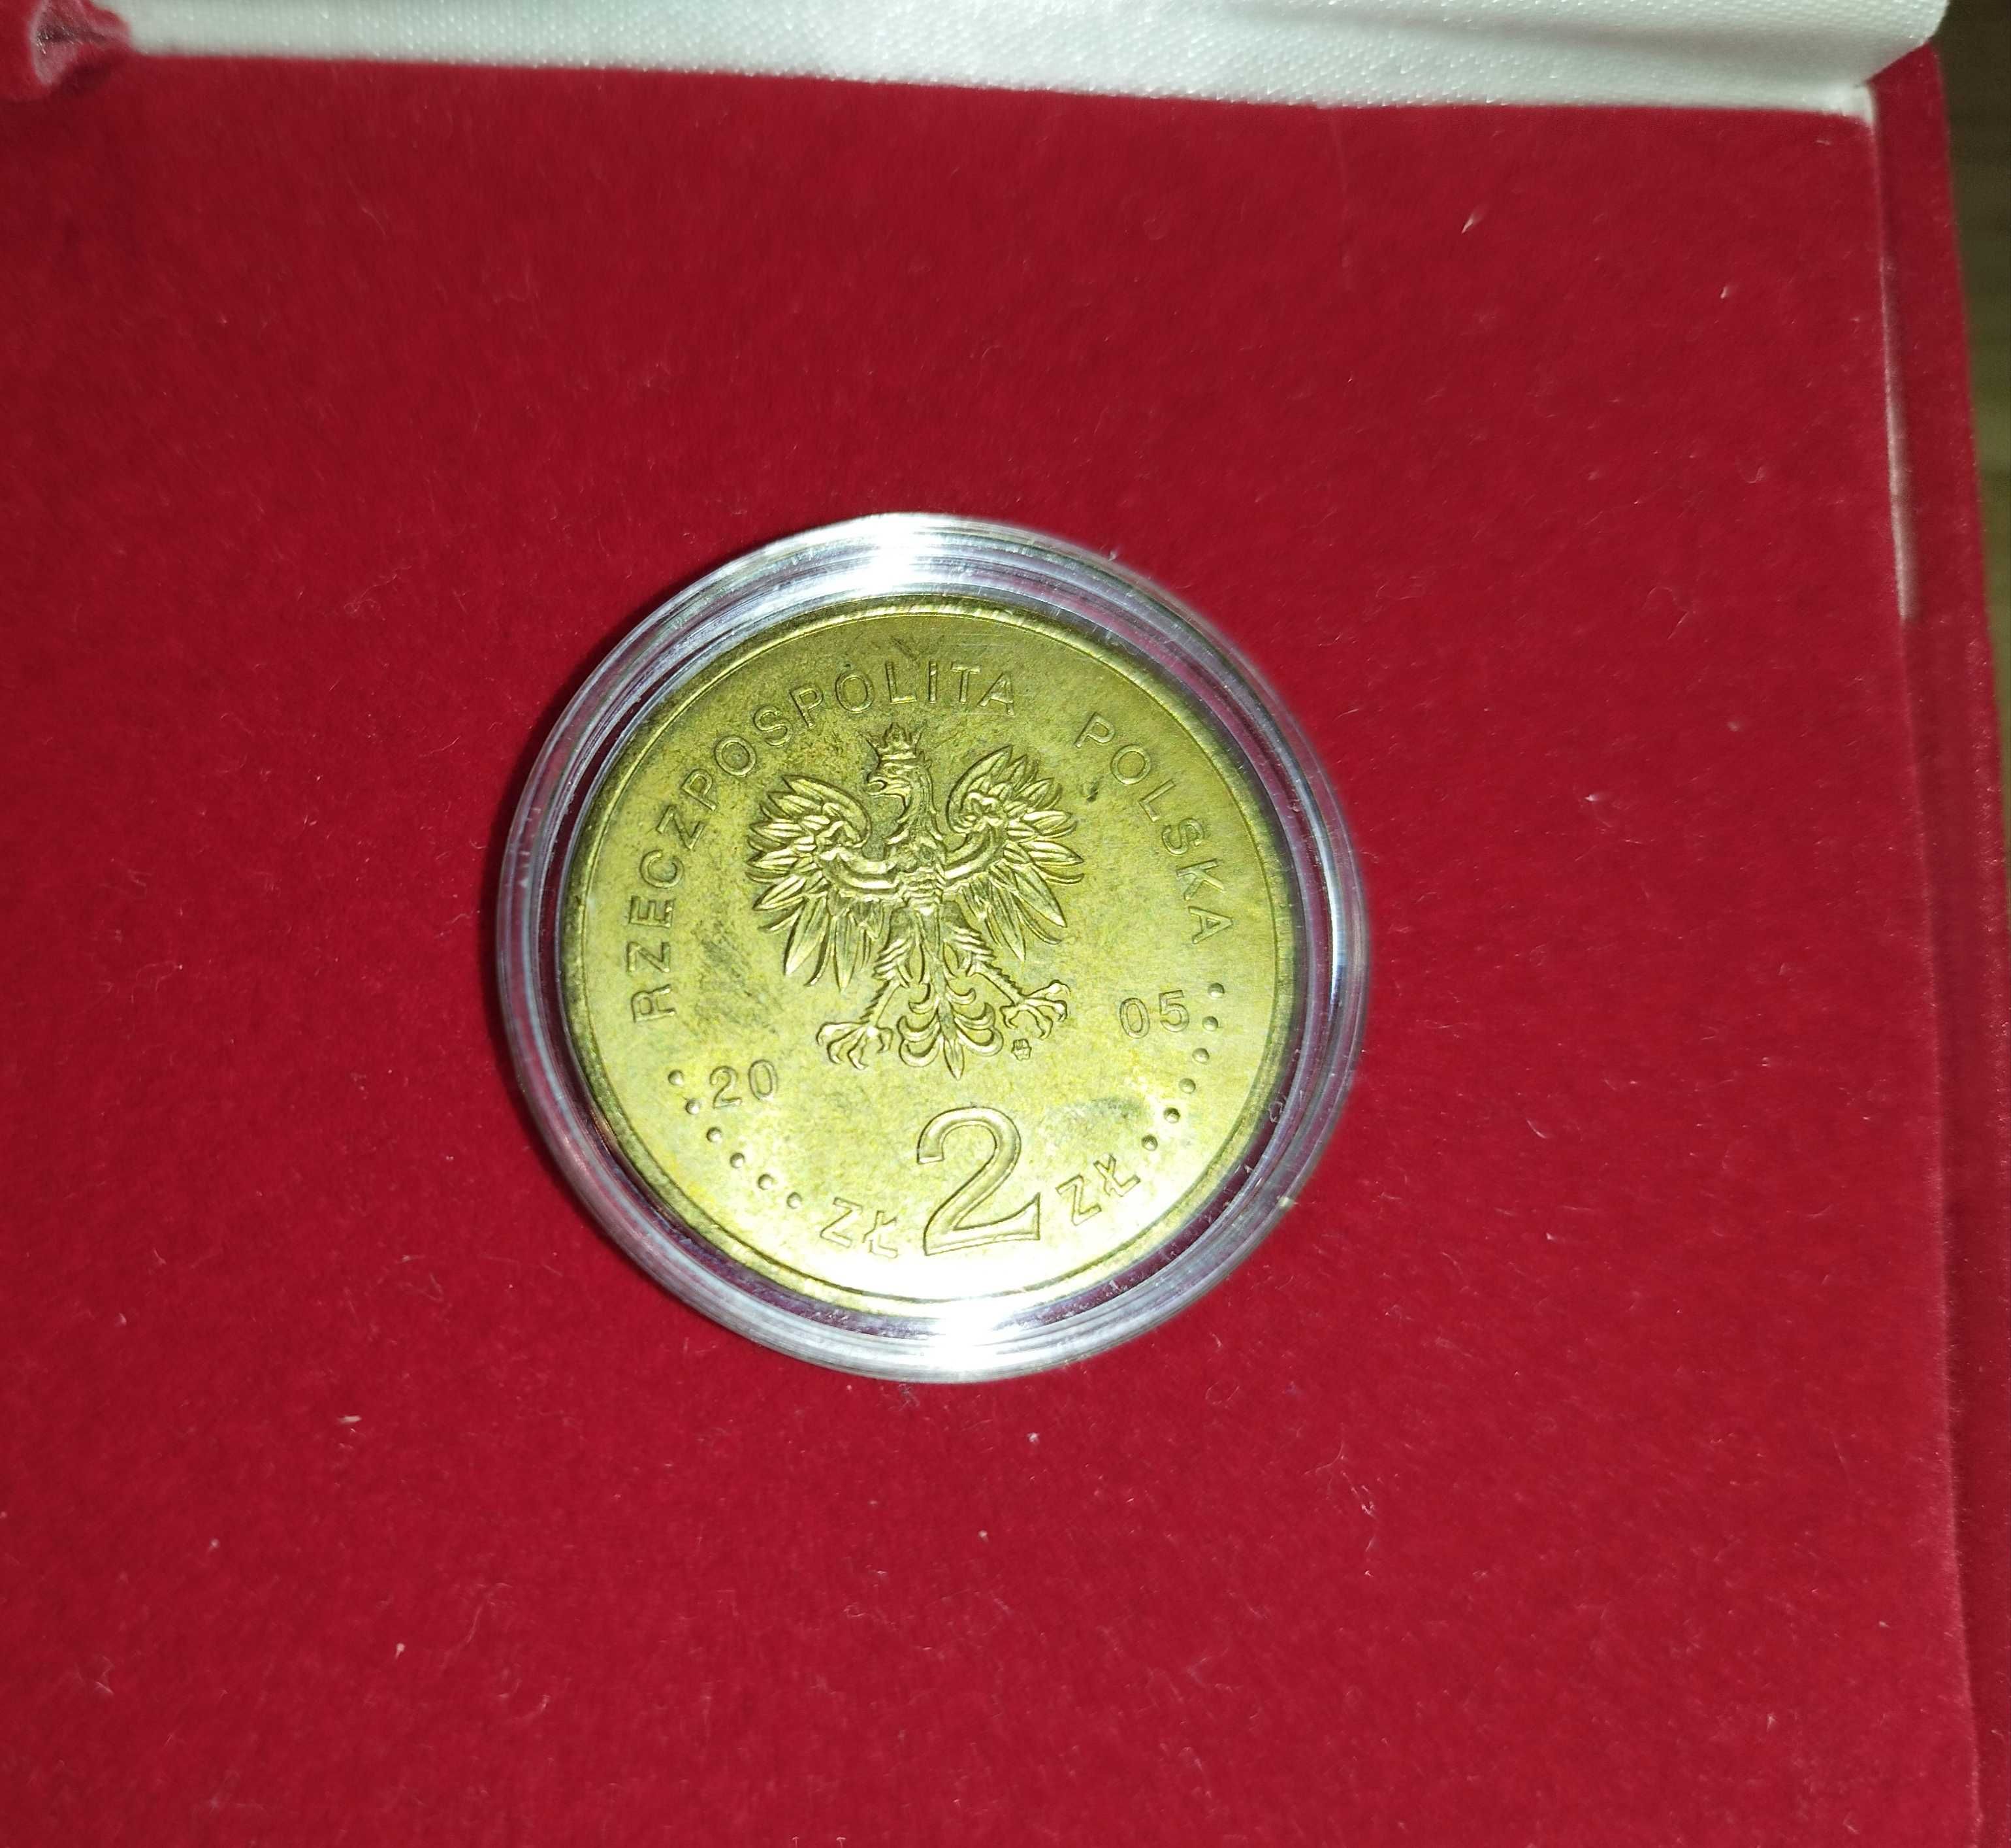 Moneta Polska 10zl + 2zl Expo Aichi 2005r pudełko